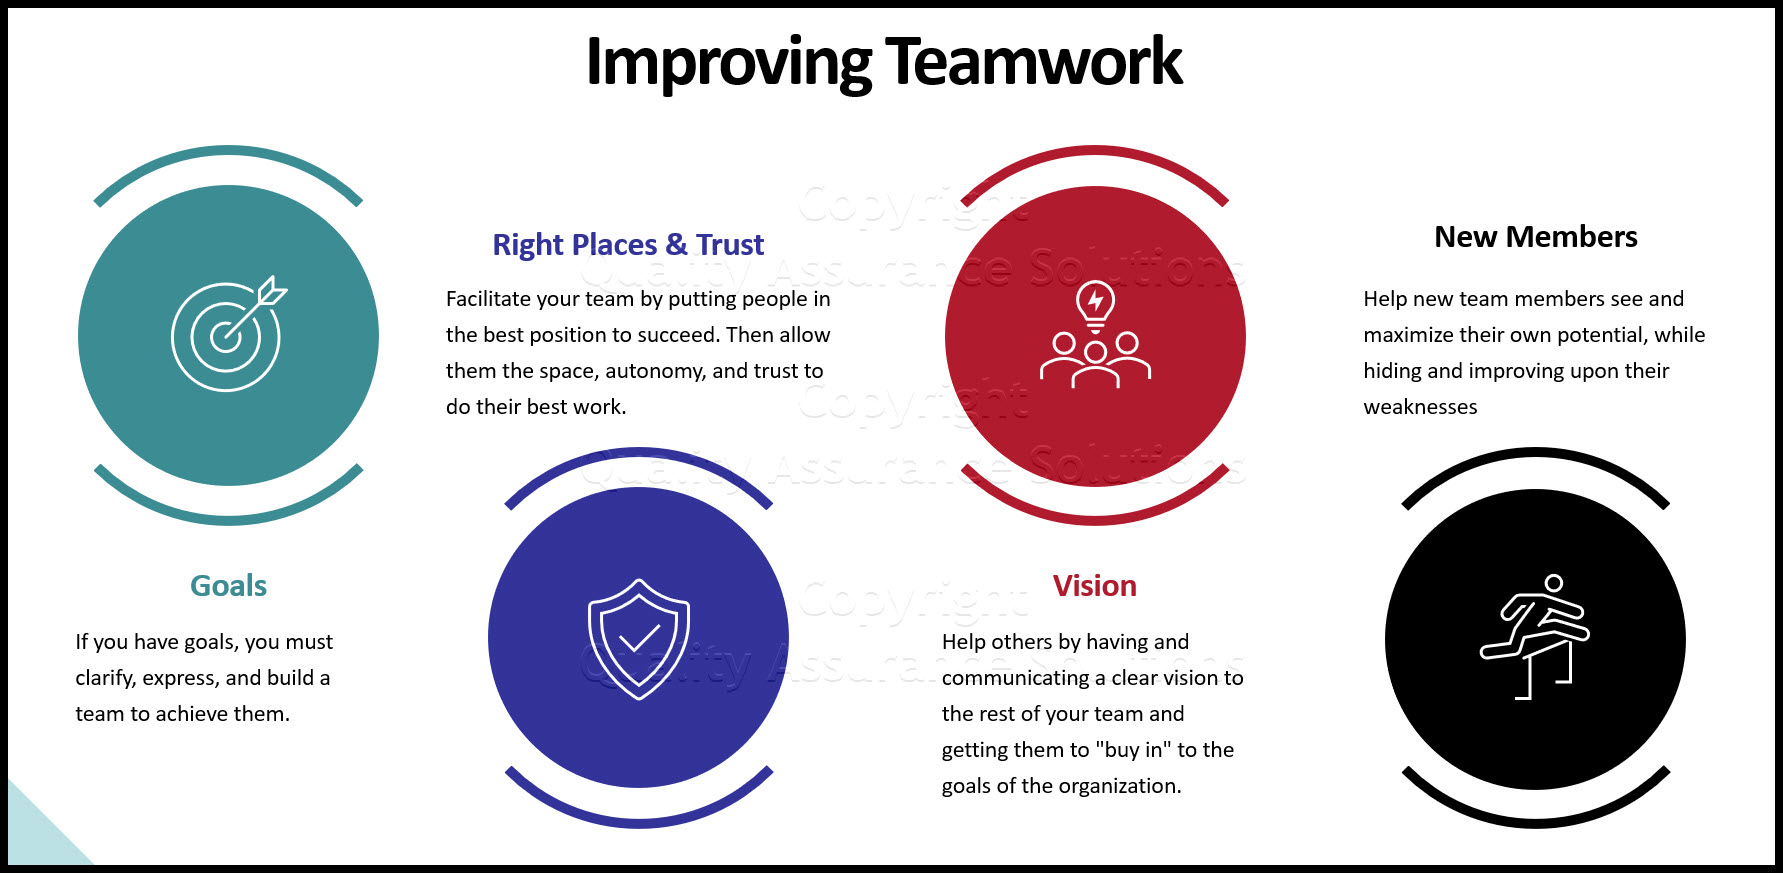 Is it teamwork or team working?